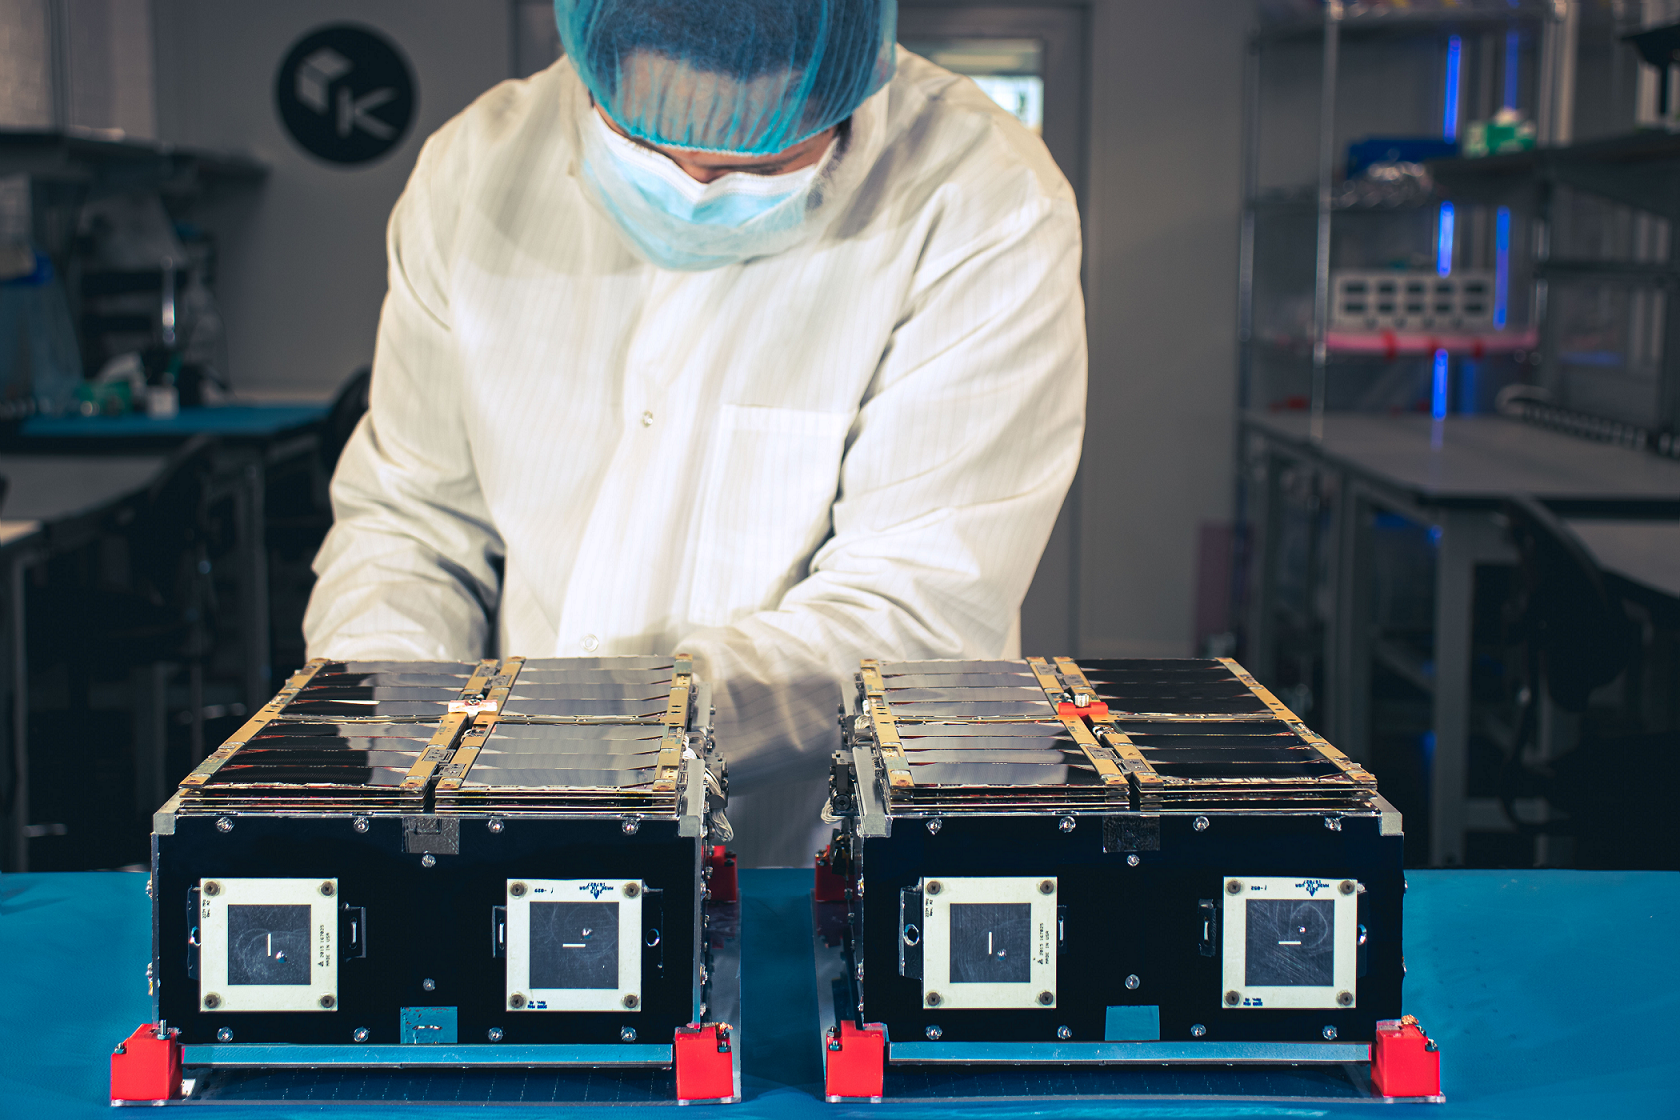 Kepler-16 & Kepler-17 being tested by a technician